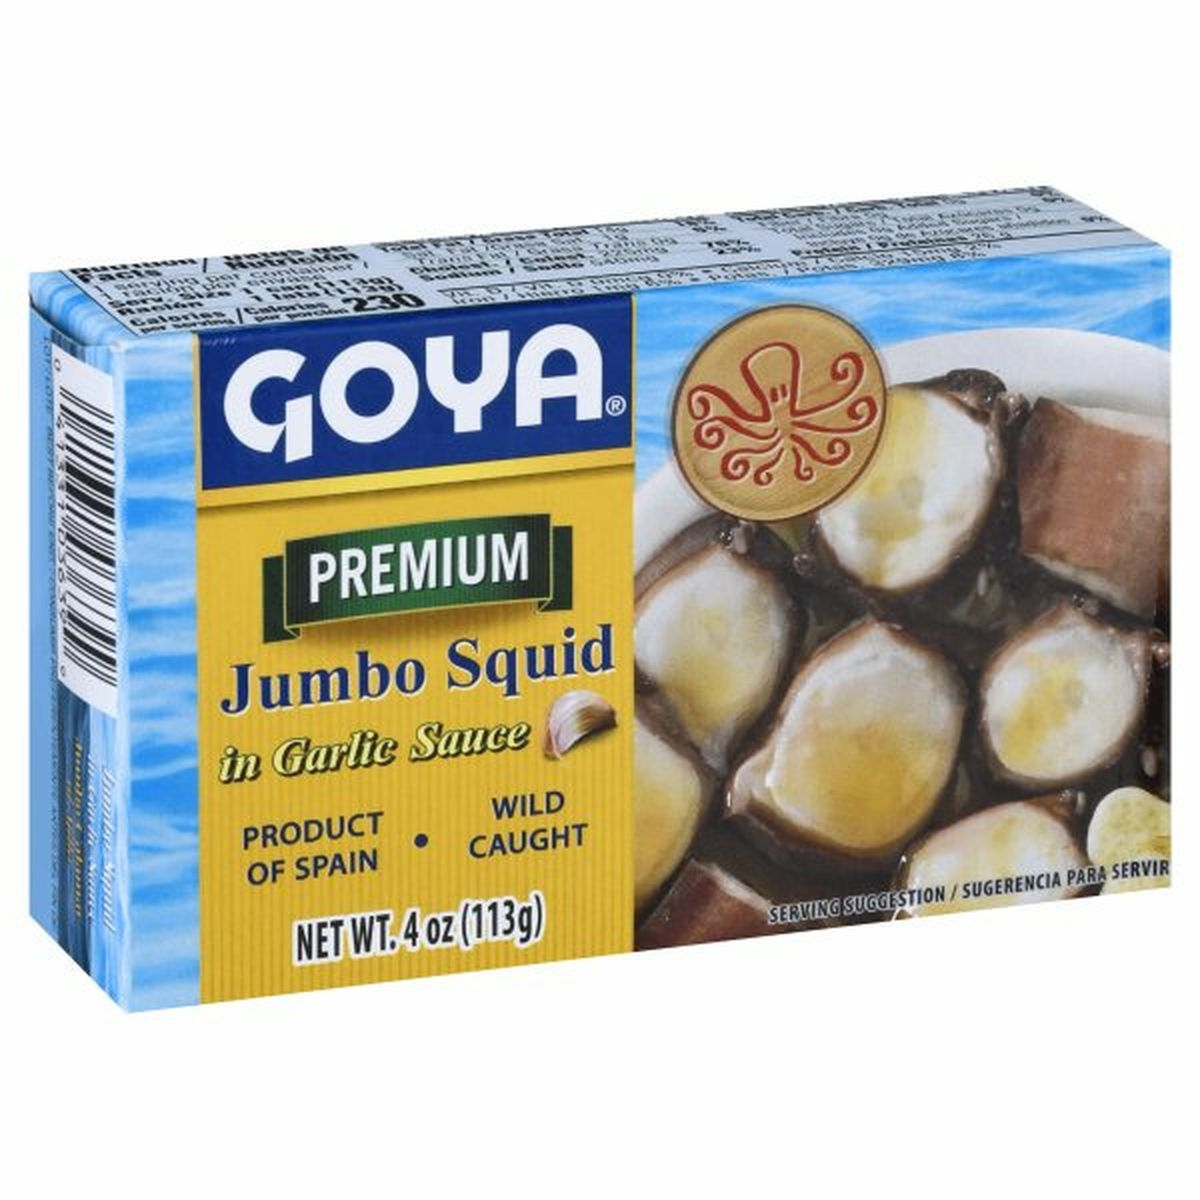 Calories in Goya Premium Jumbo Squid in Garlic Sauce, Jumbo